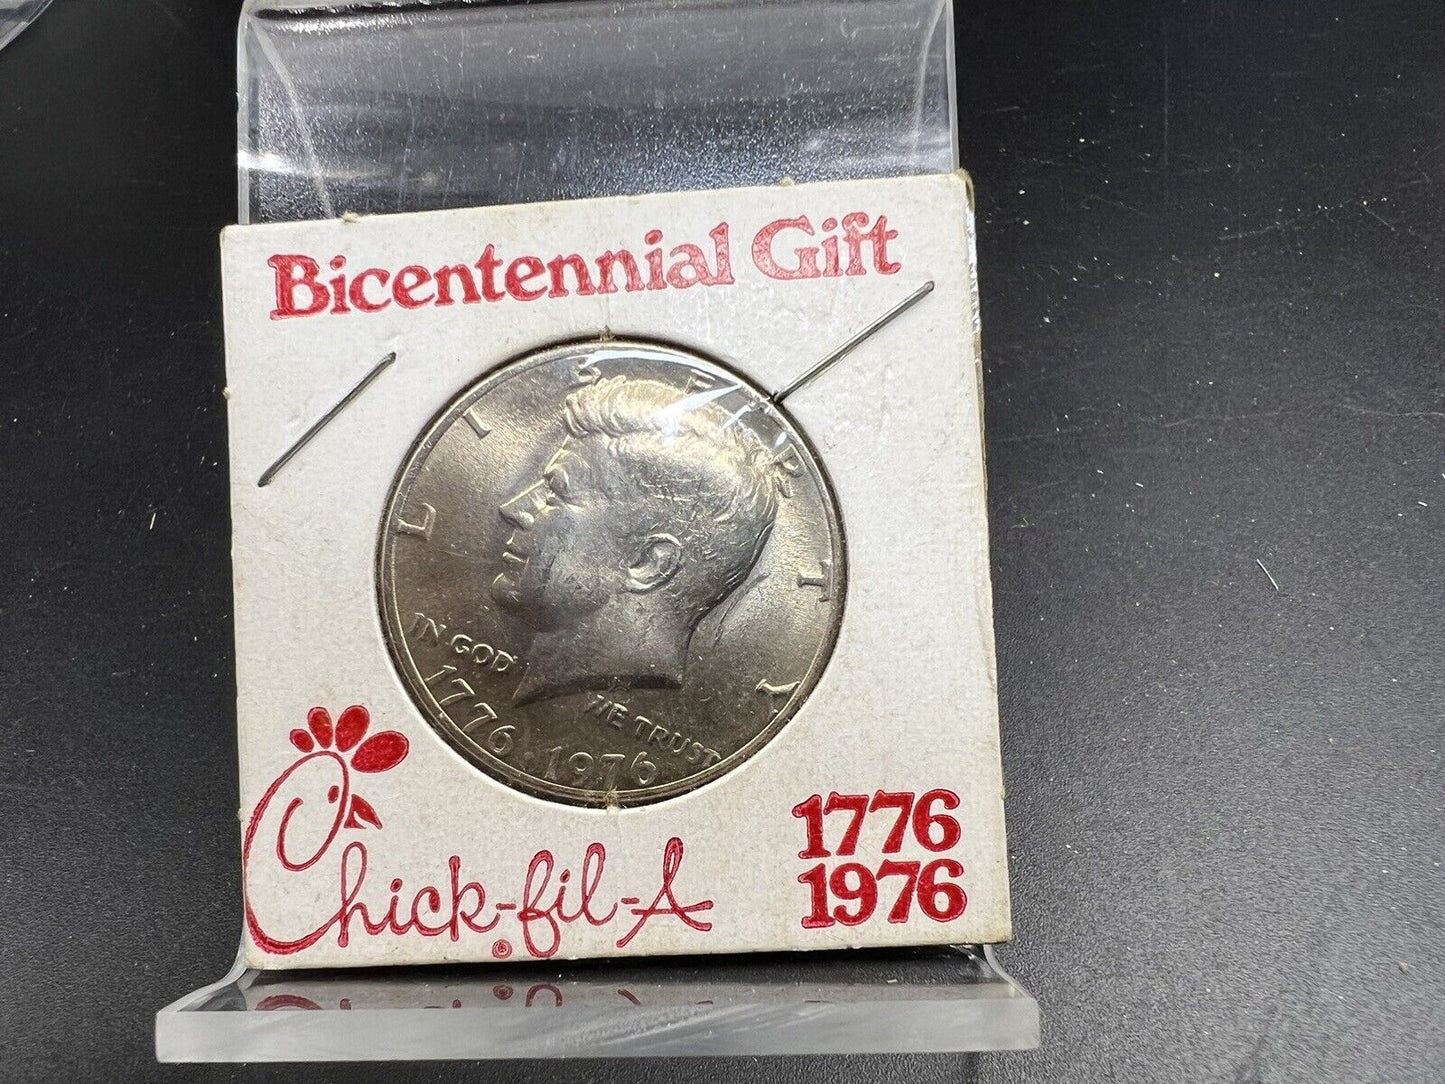 Chick Fil A BICENTENNIAL GIFT CH BU UNC 1776 - 1976 P Kennedy Half Dollar UNC